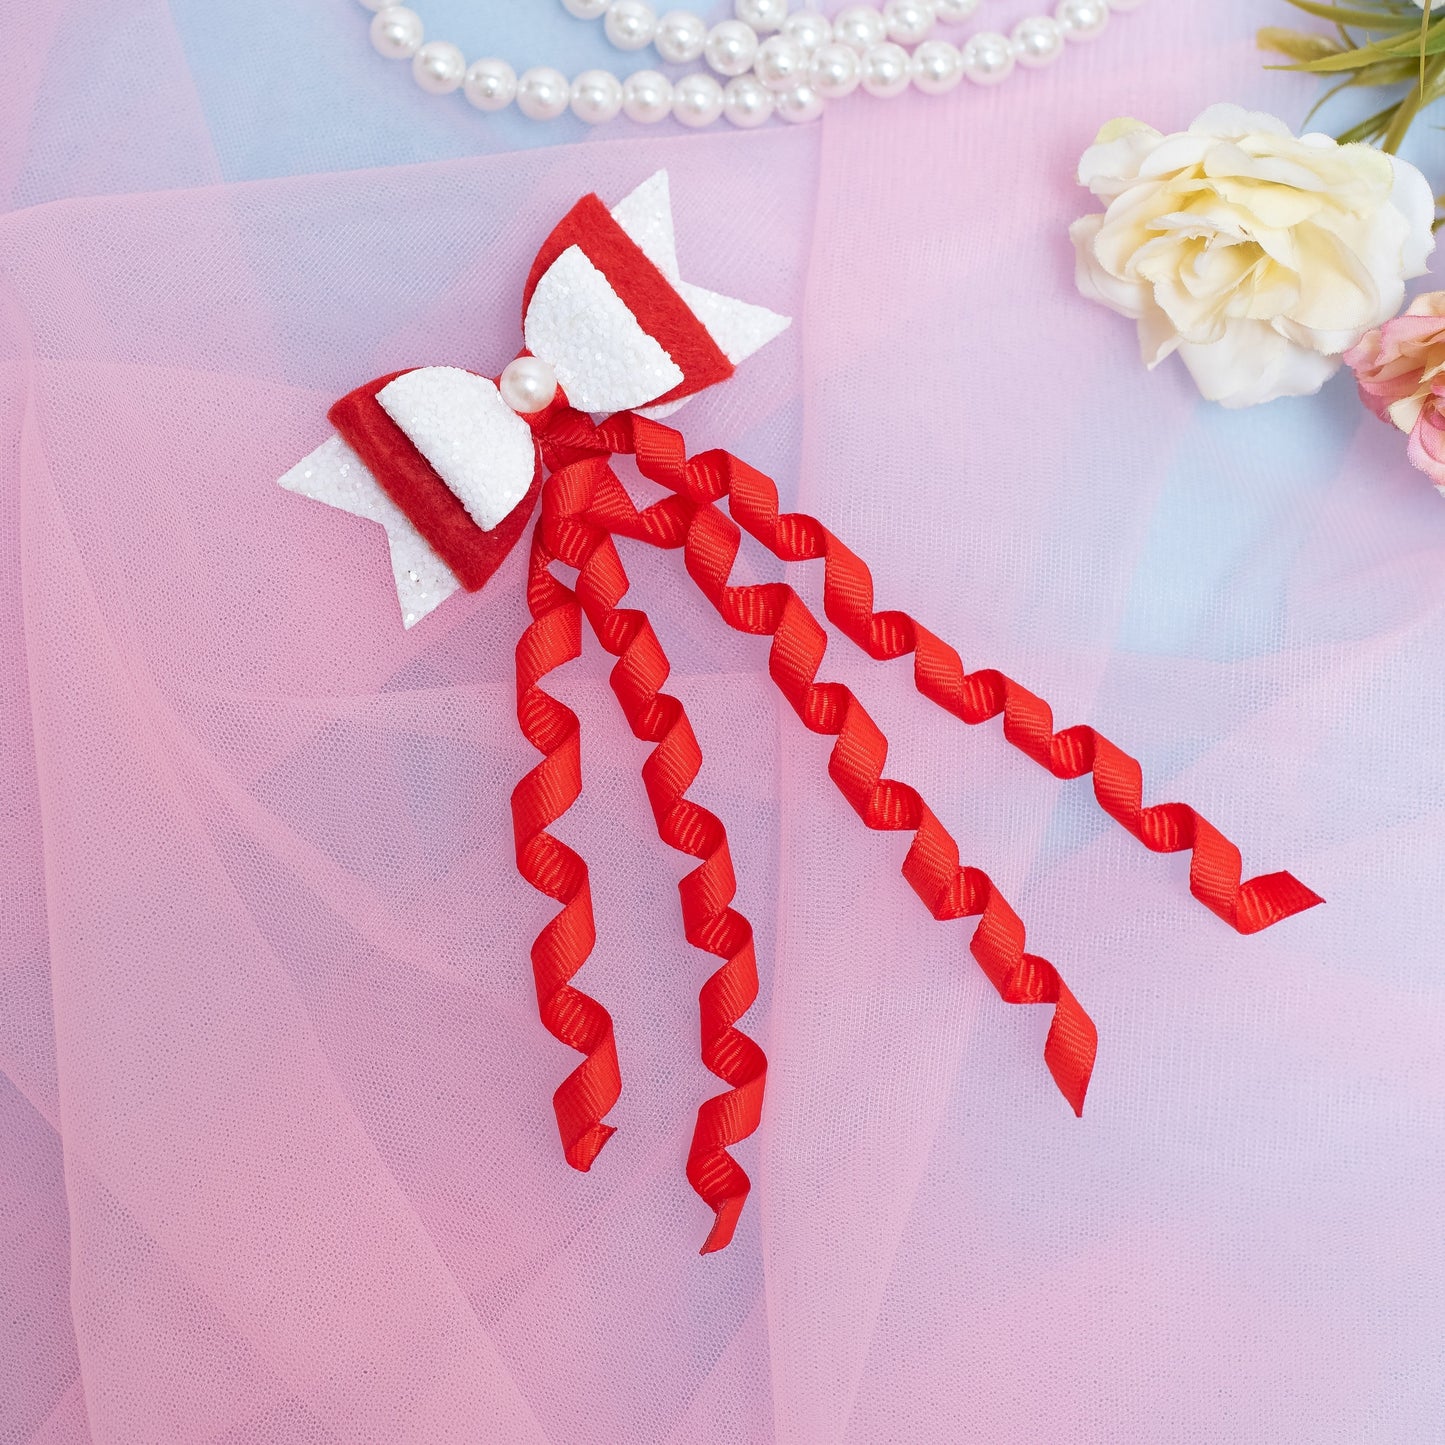 Dangler Hair-pin with Fancy Shimmer Bow for Party -  Red, White (1 Dangler on Alligator clip )